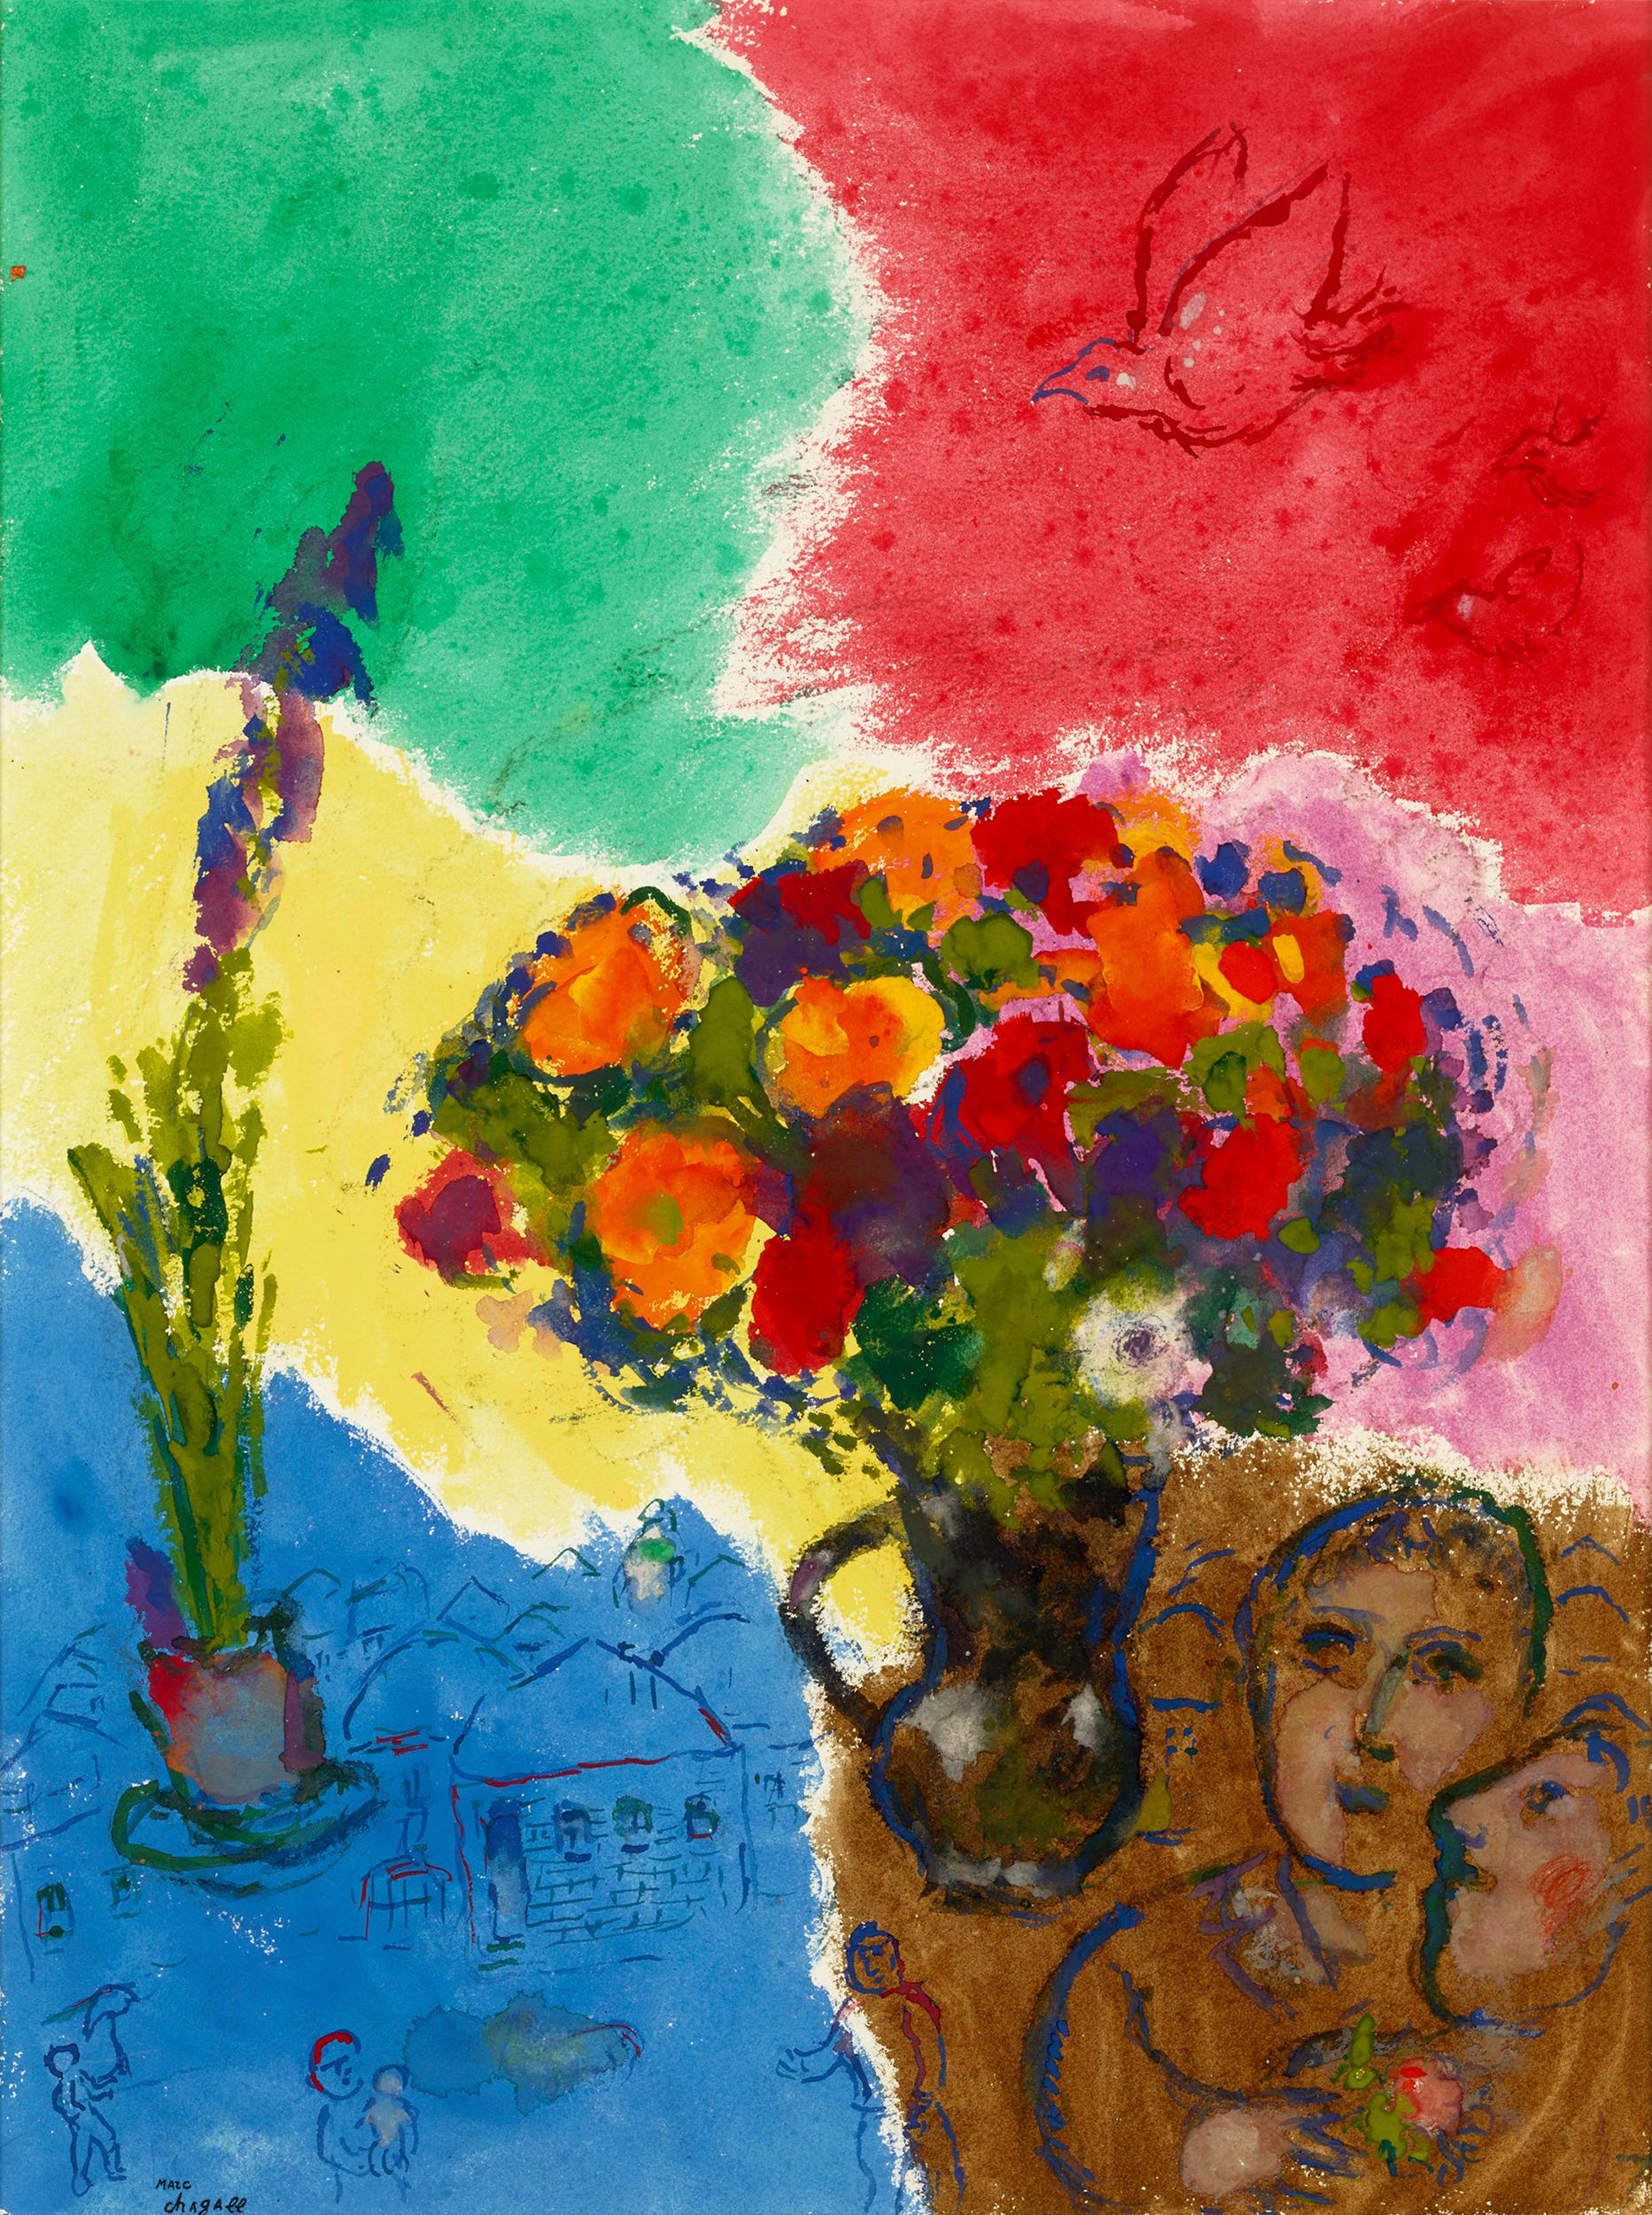 How do I pronounce Marc Chagall?